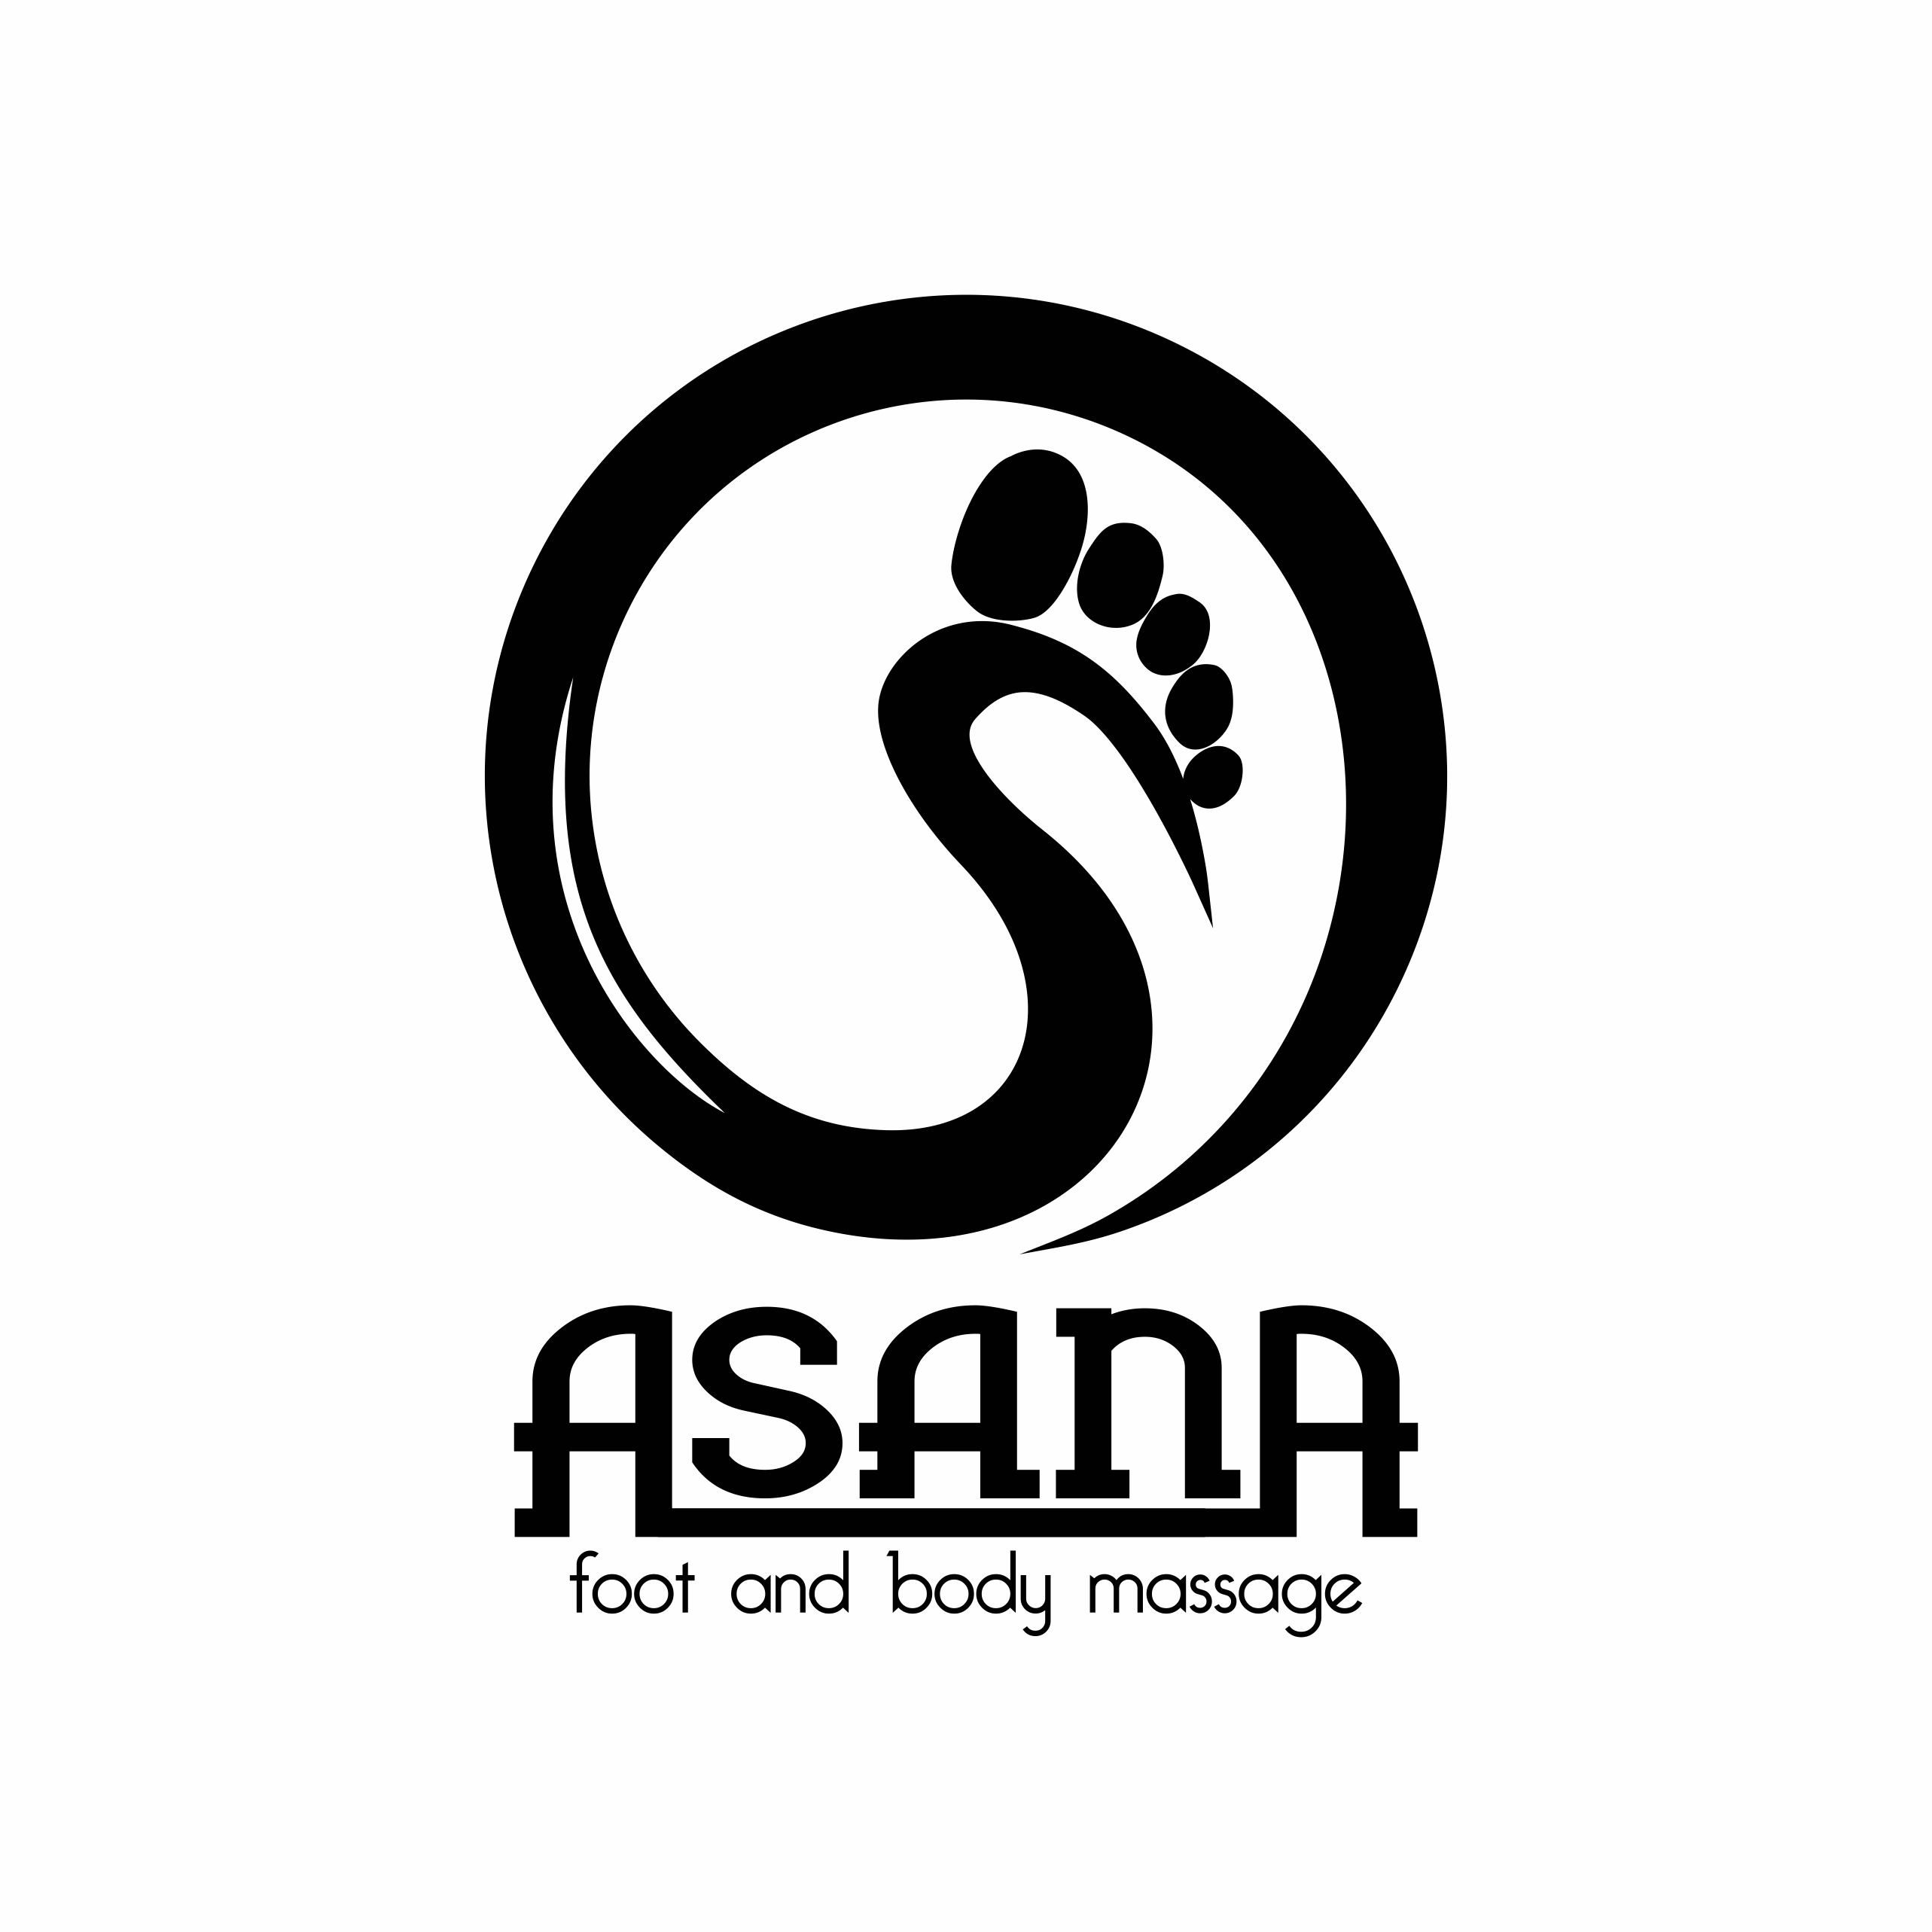 Cửa hàng foot and body massage ASANA